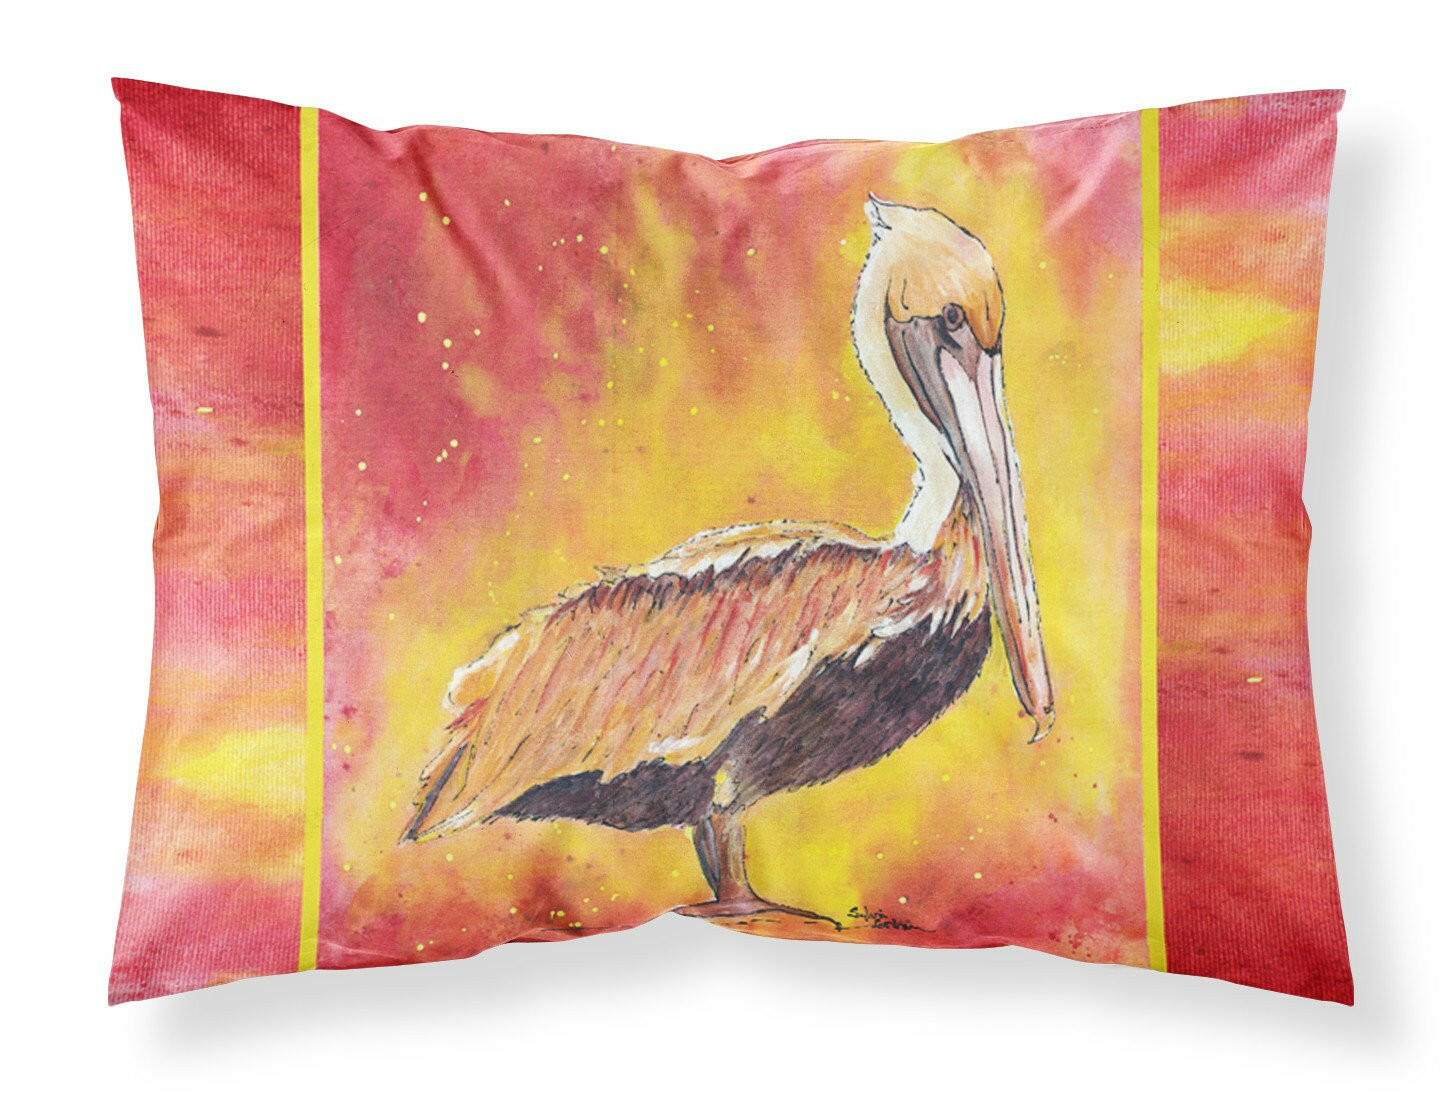 Pelican Moisture wicking Fabric standard pillowcase by Caroline's Treasures